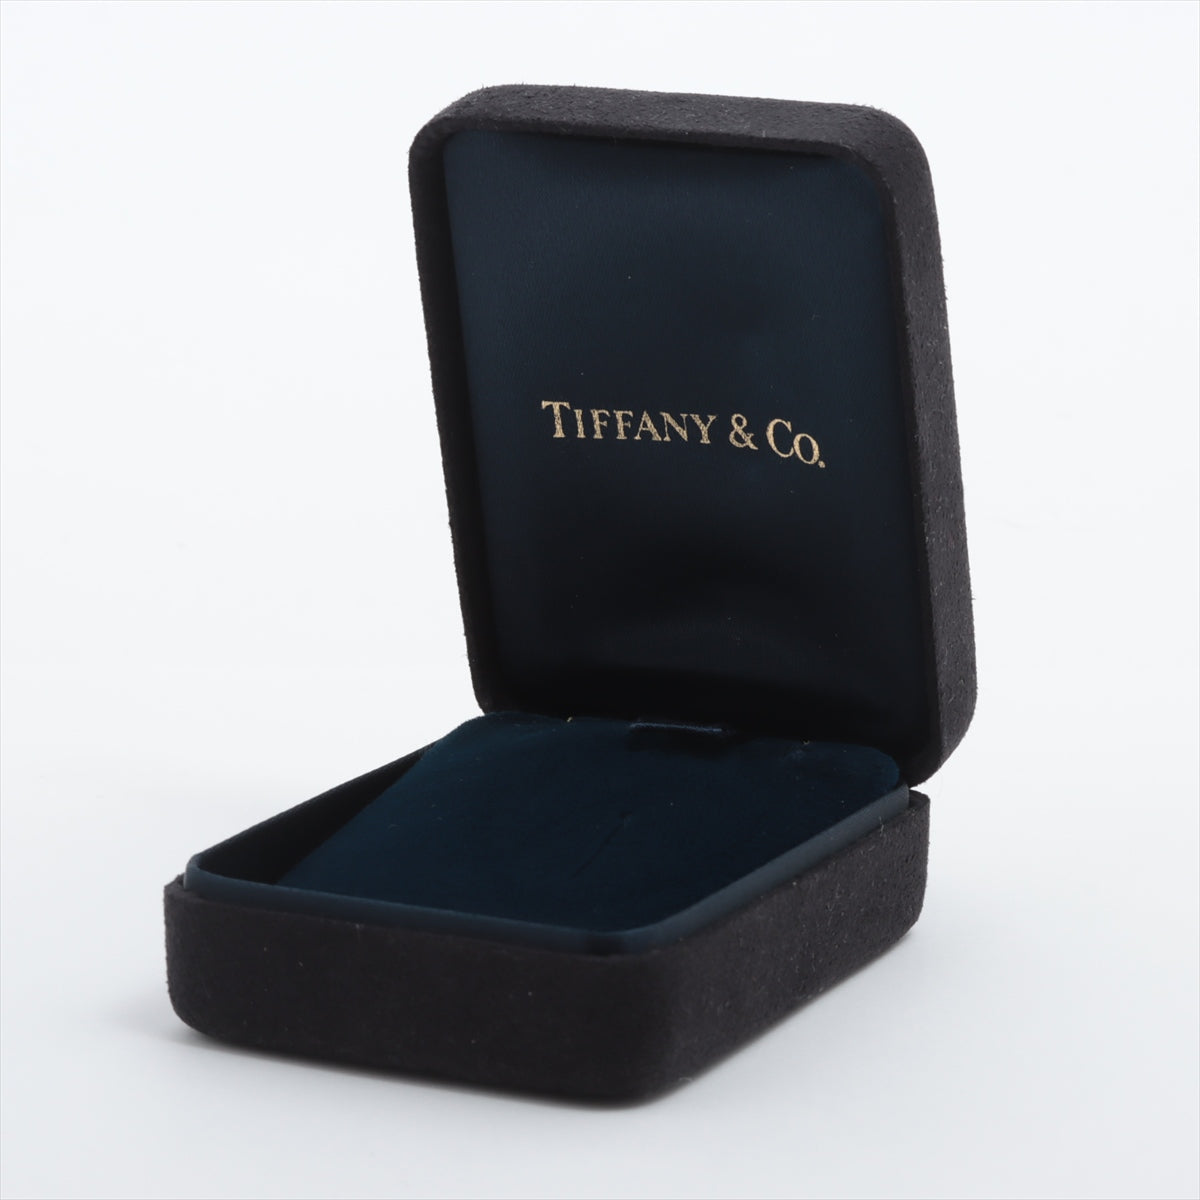 Tiffany Dots Circle Diamond Necklace 750(YG)Pt950 4.9g